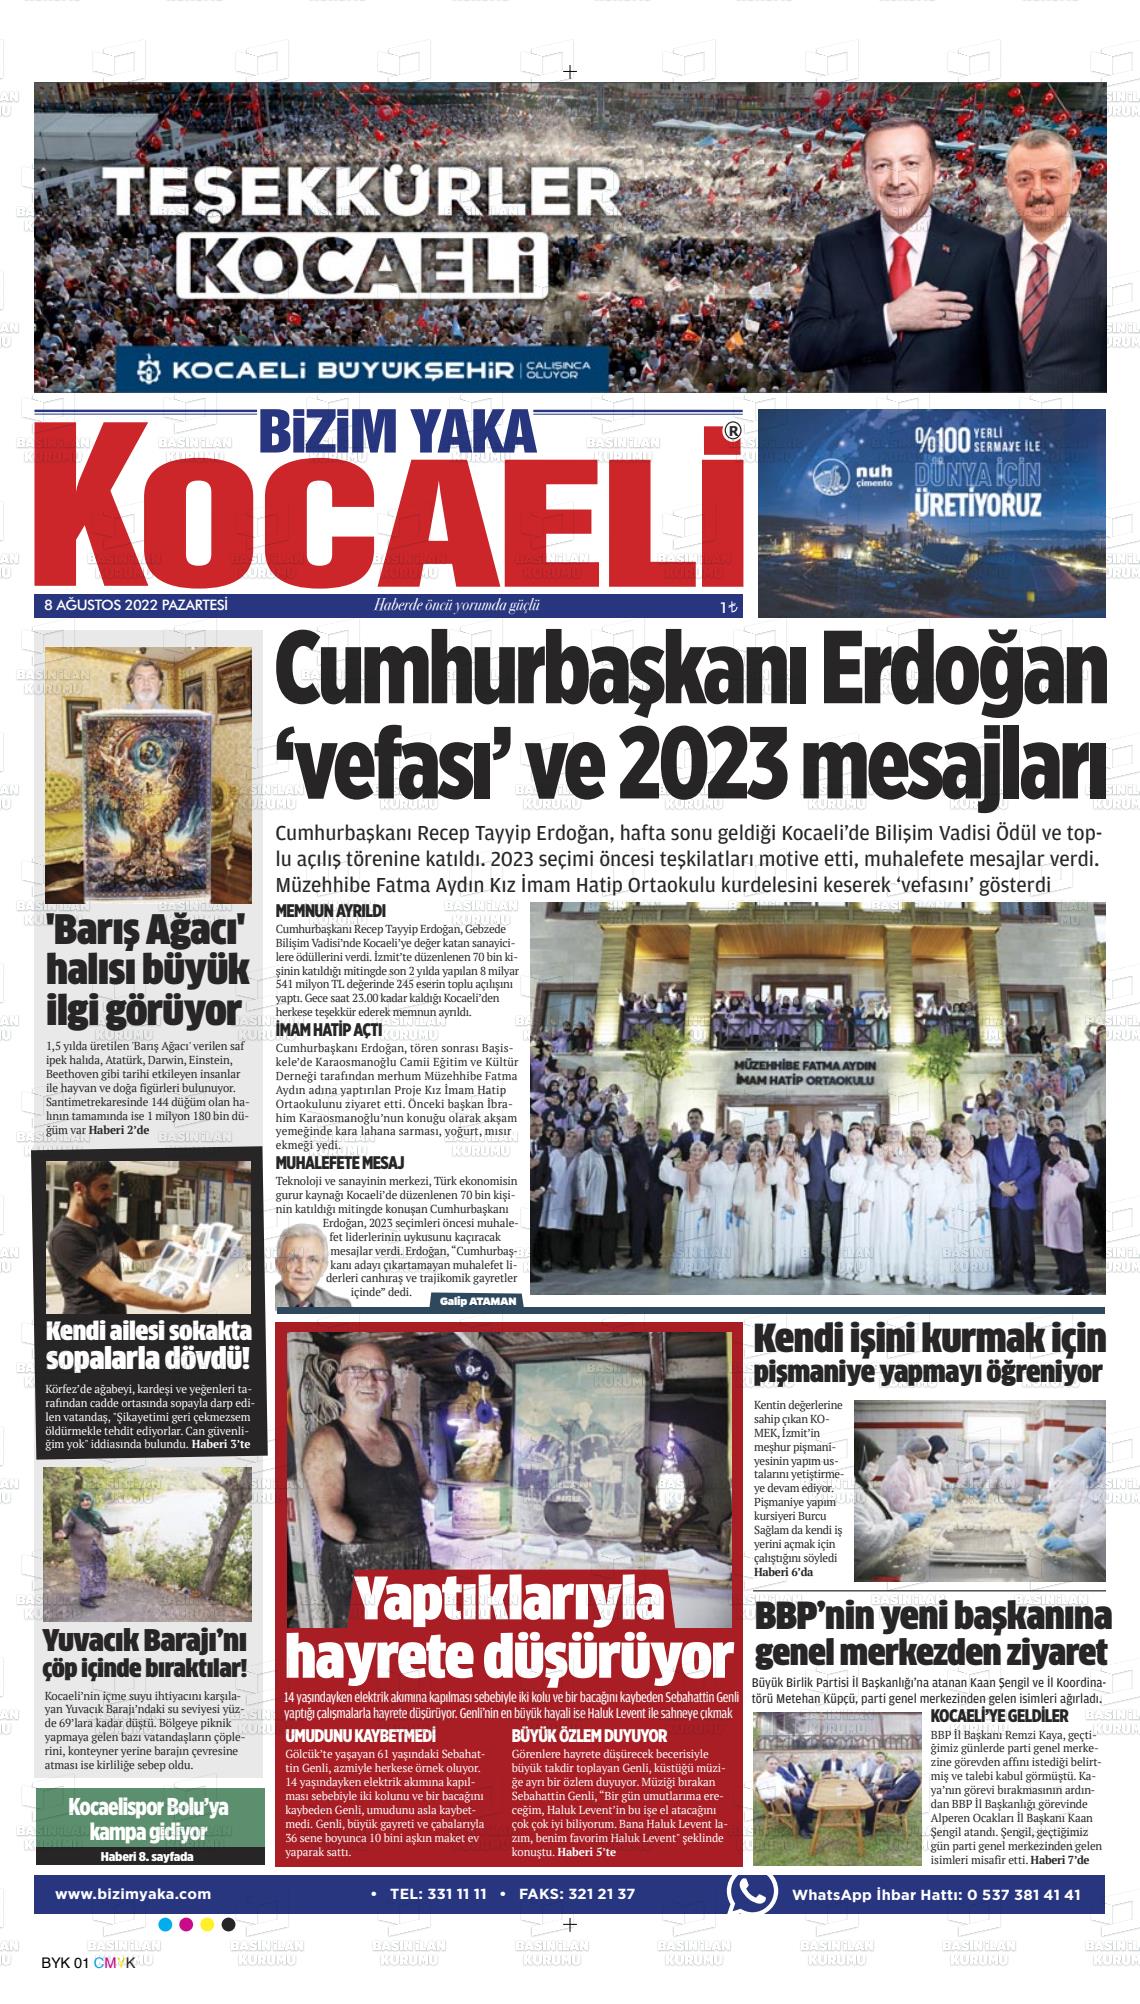 08 Ağustos 2022 Bizim Yaka Gazete Manşeti